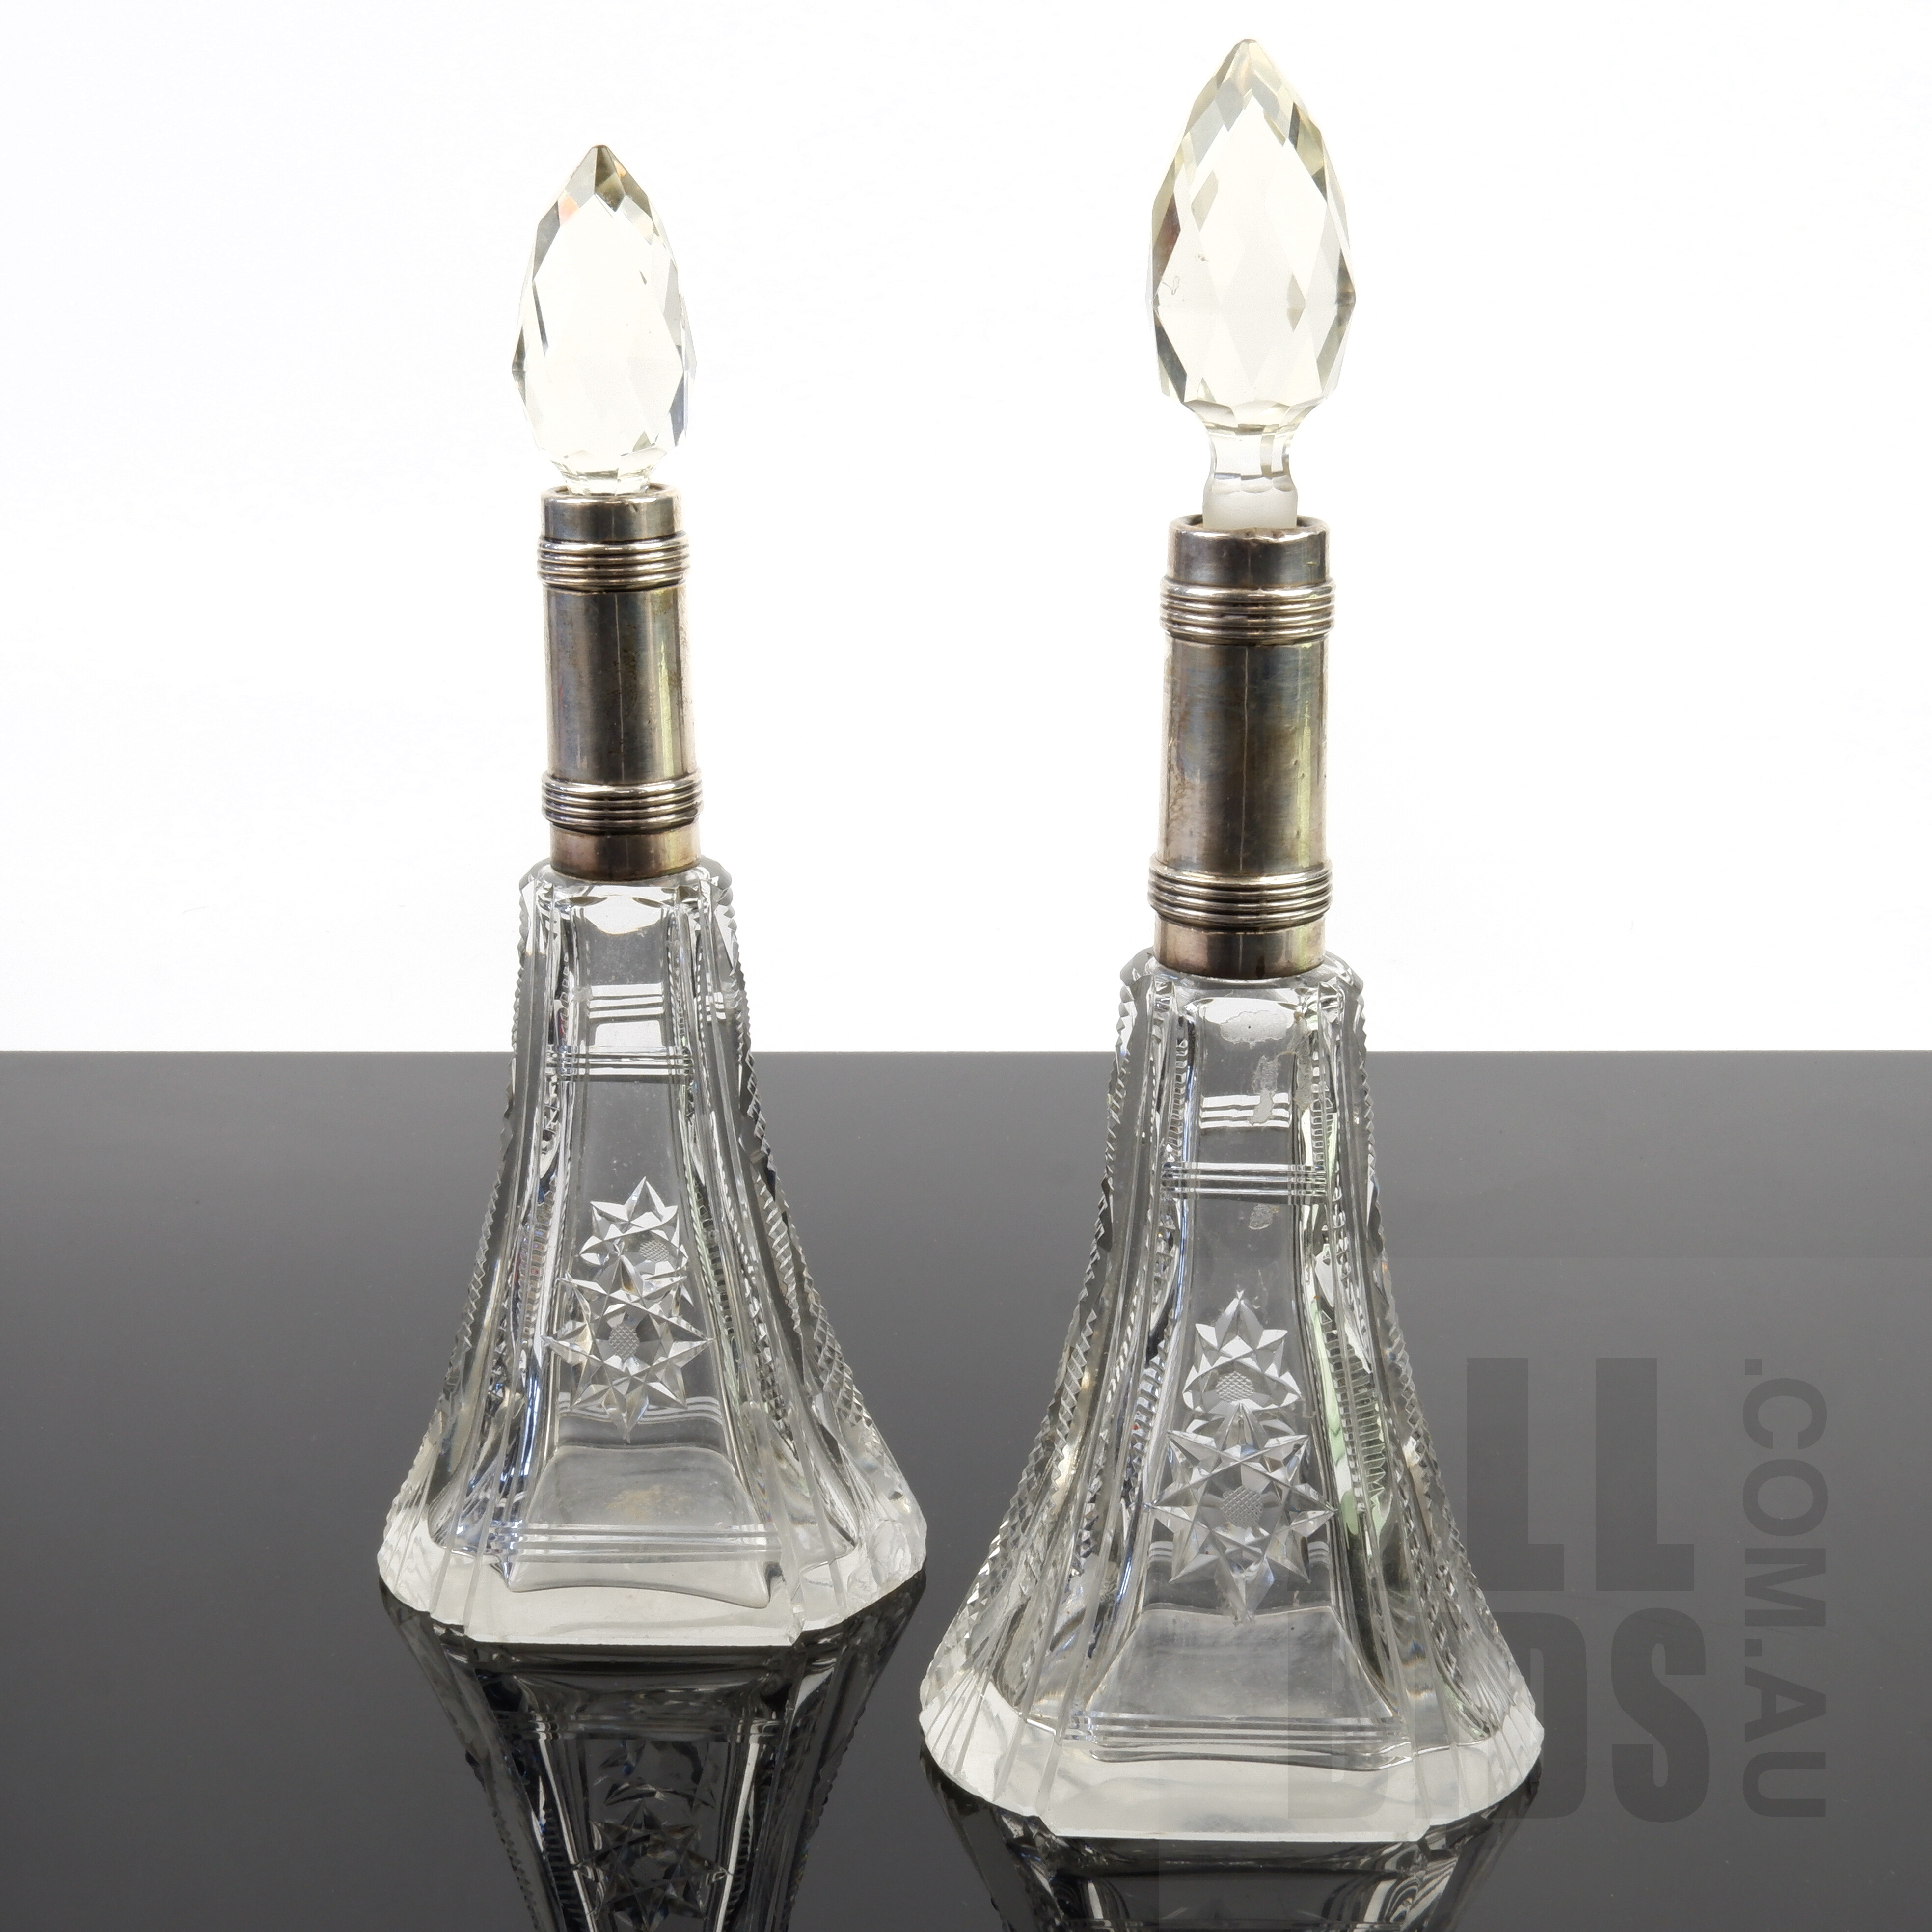 'Pair of Sterling Silver Mounted Cut Crystal Perfume Bottles, London, Henry Perkins & Sons, 1925'